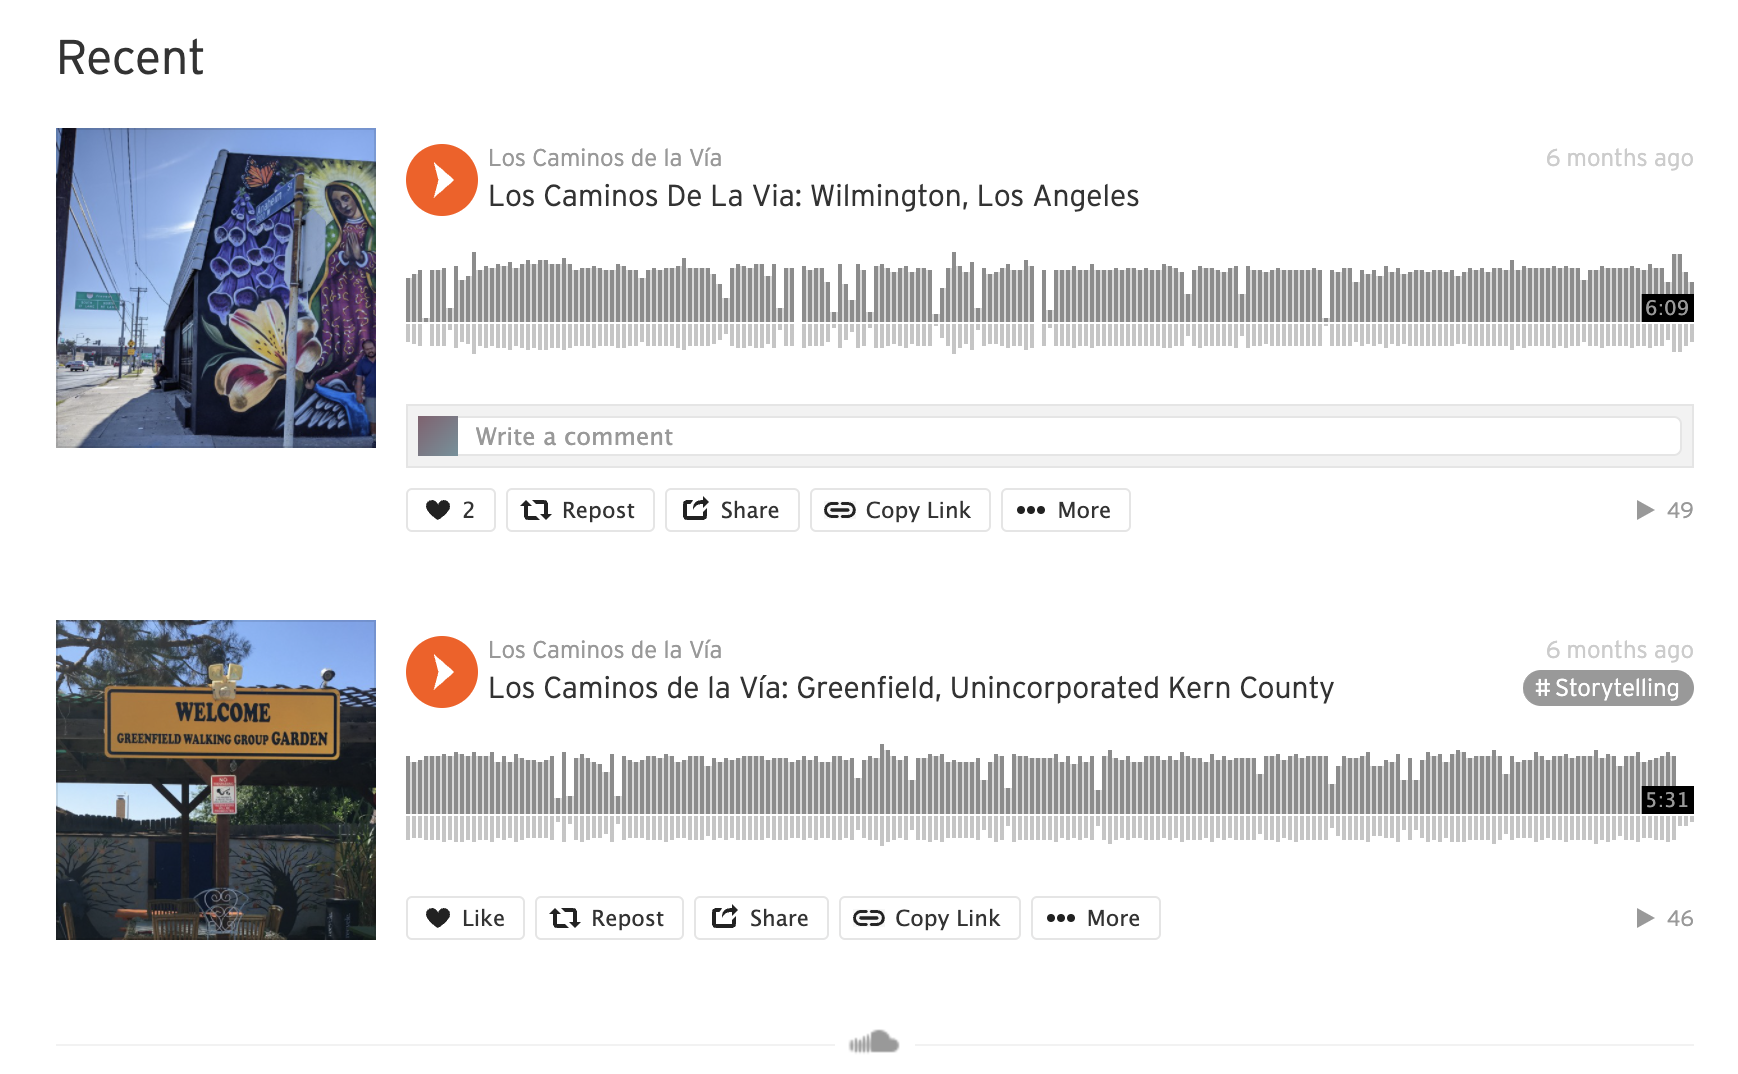 Soundcloud page for the Radionovelas created for the Comunidades Activas y Seguras Program